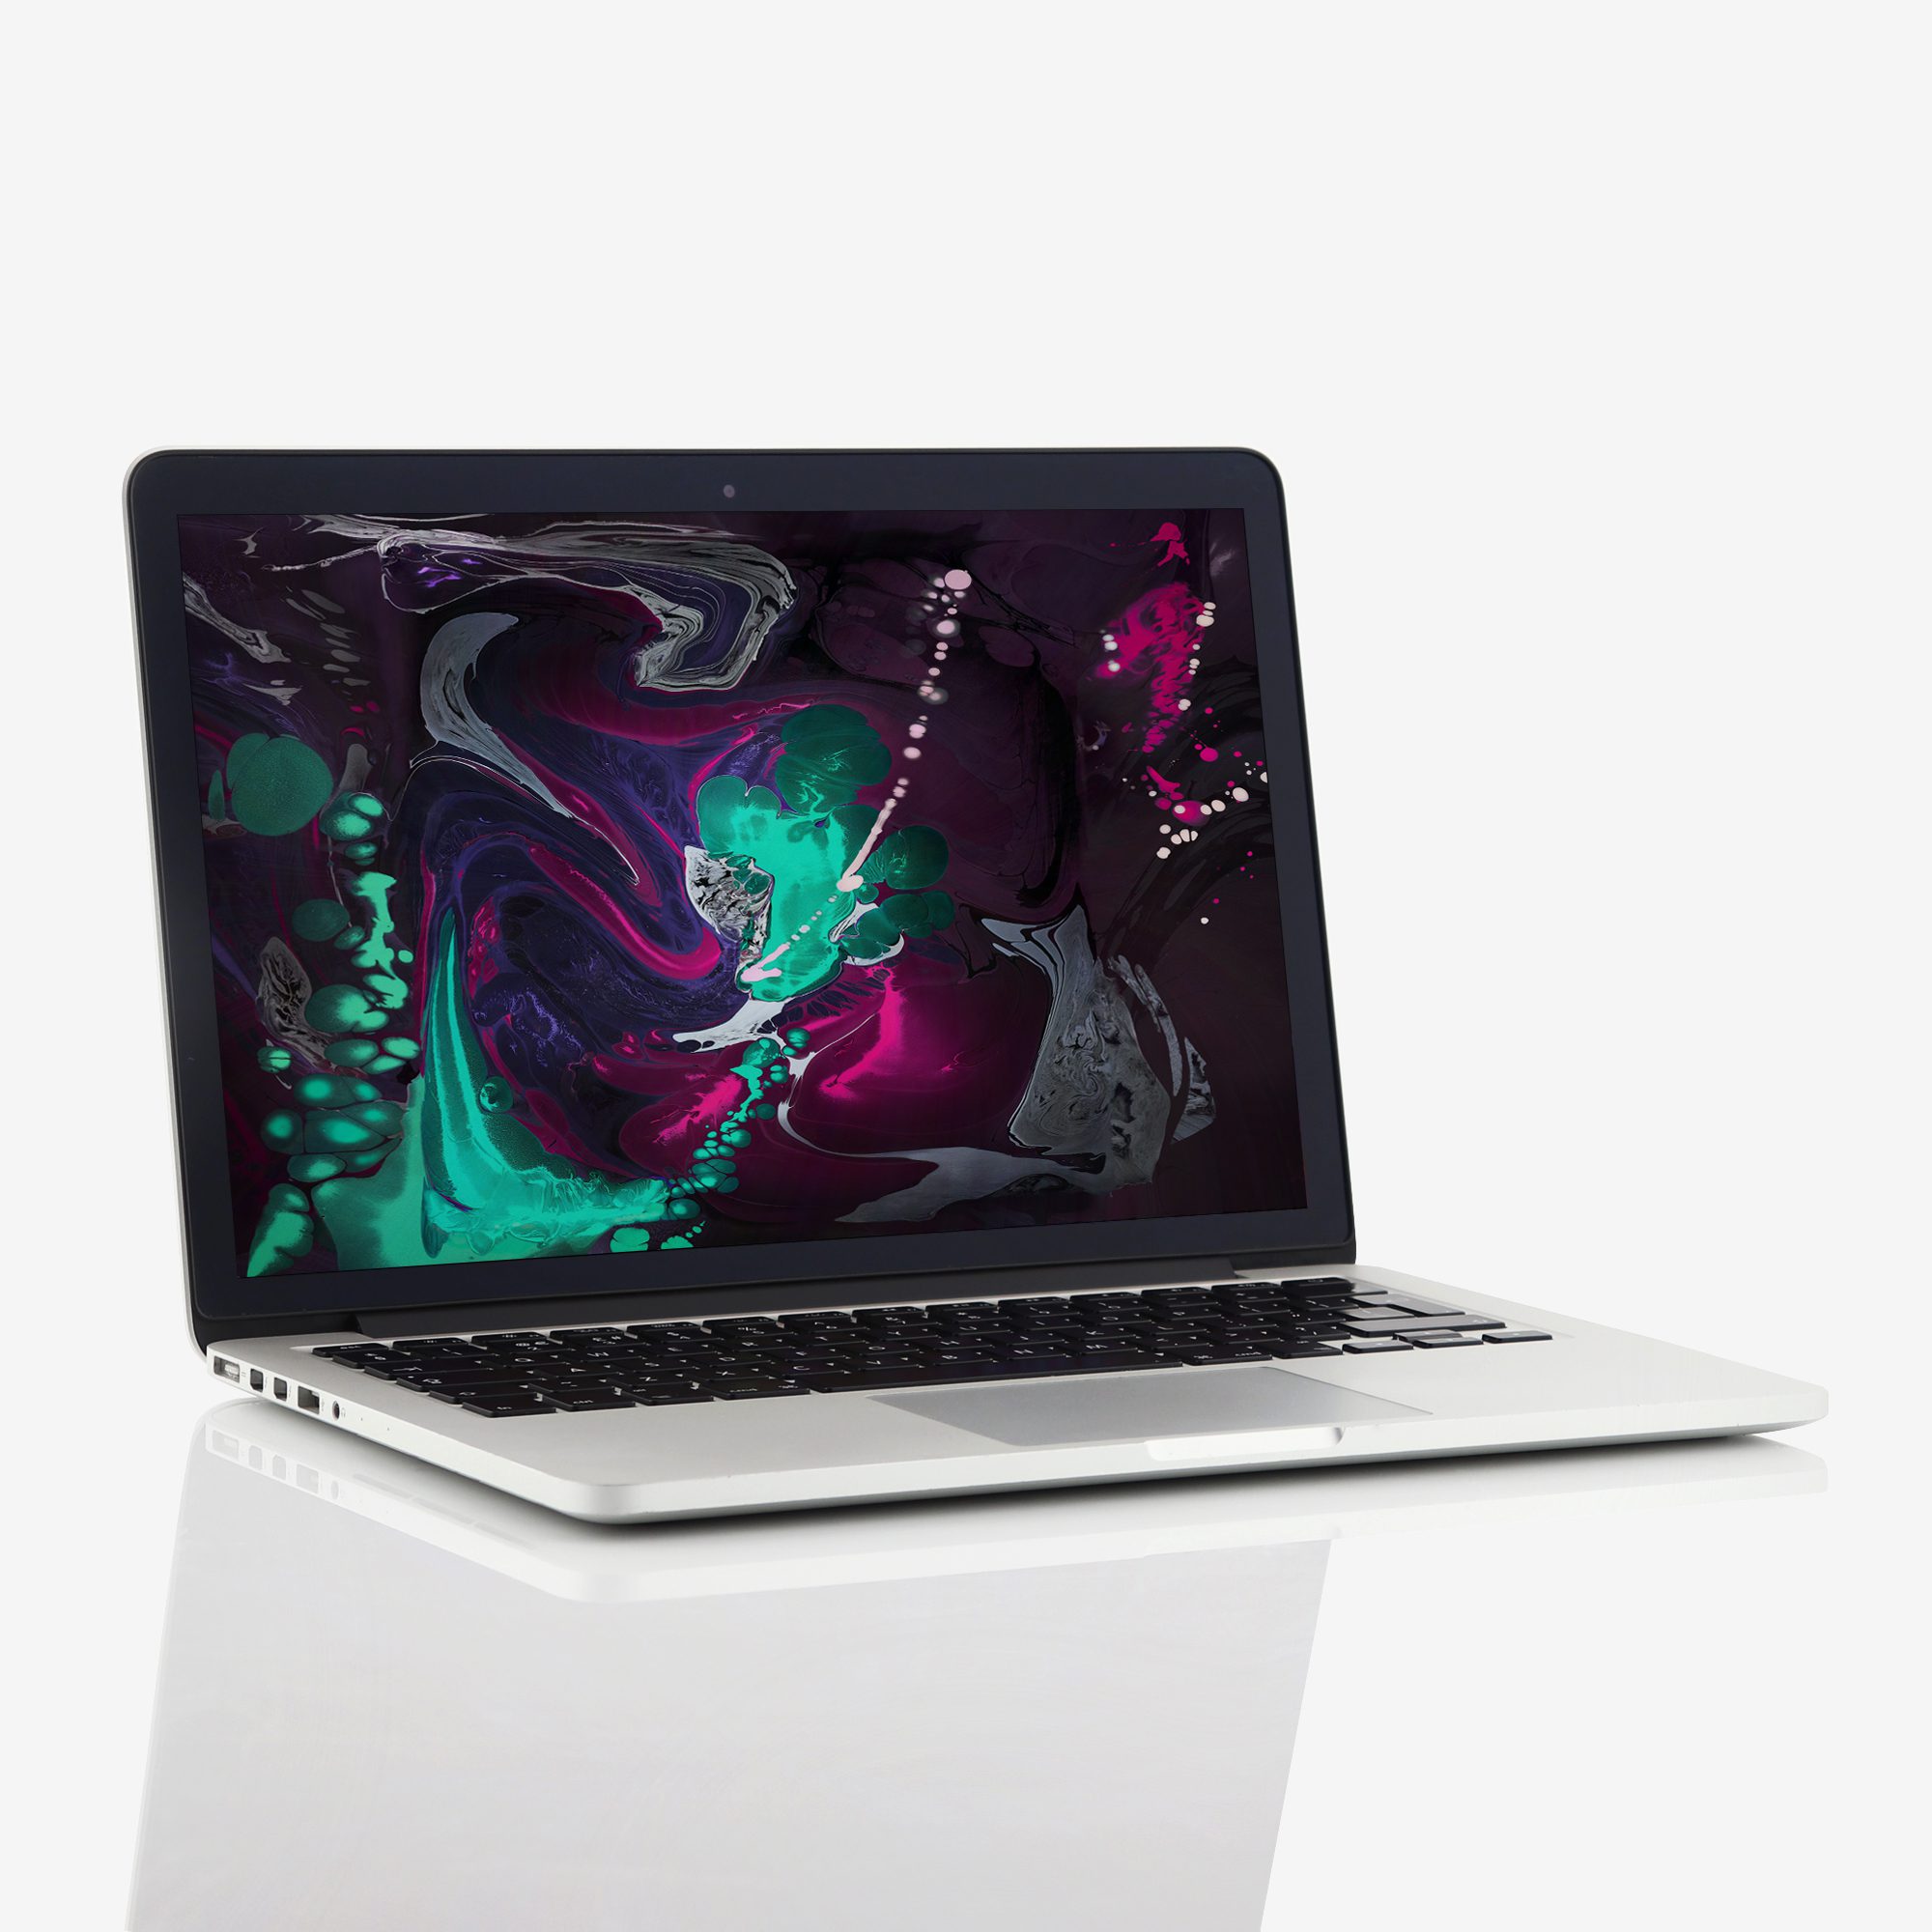 1 x Apple MacBook Pro Retina 13 Inch Intel Core i5 2.40 GHz (2013)